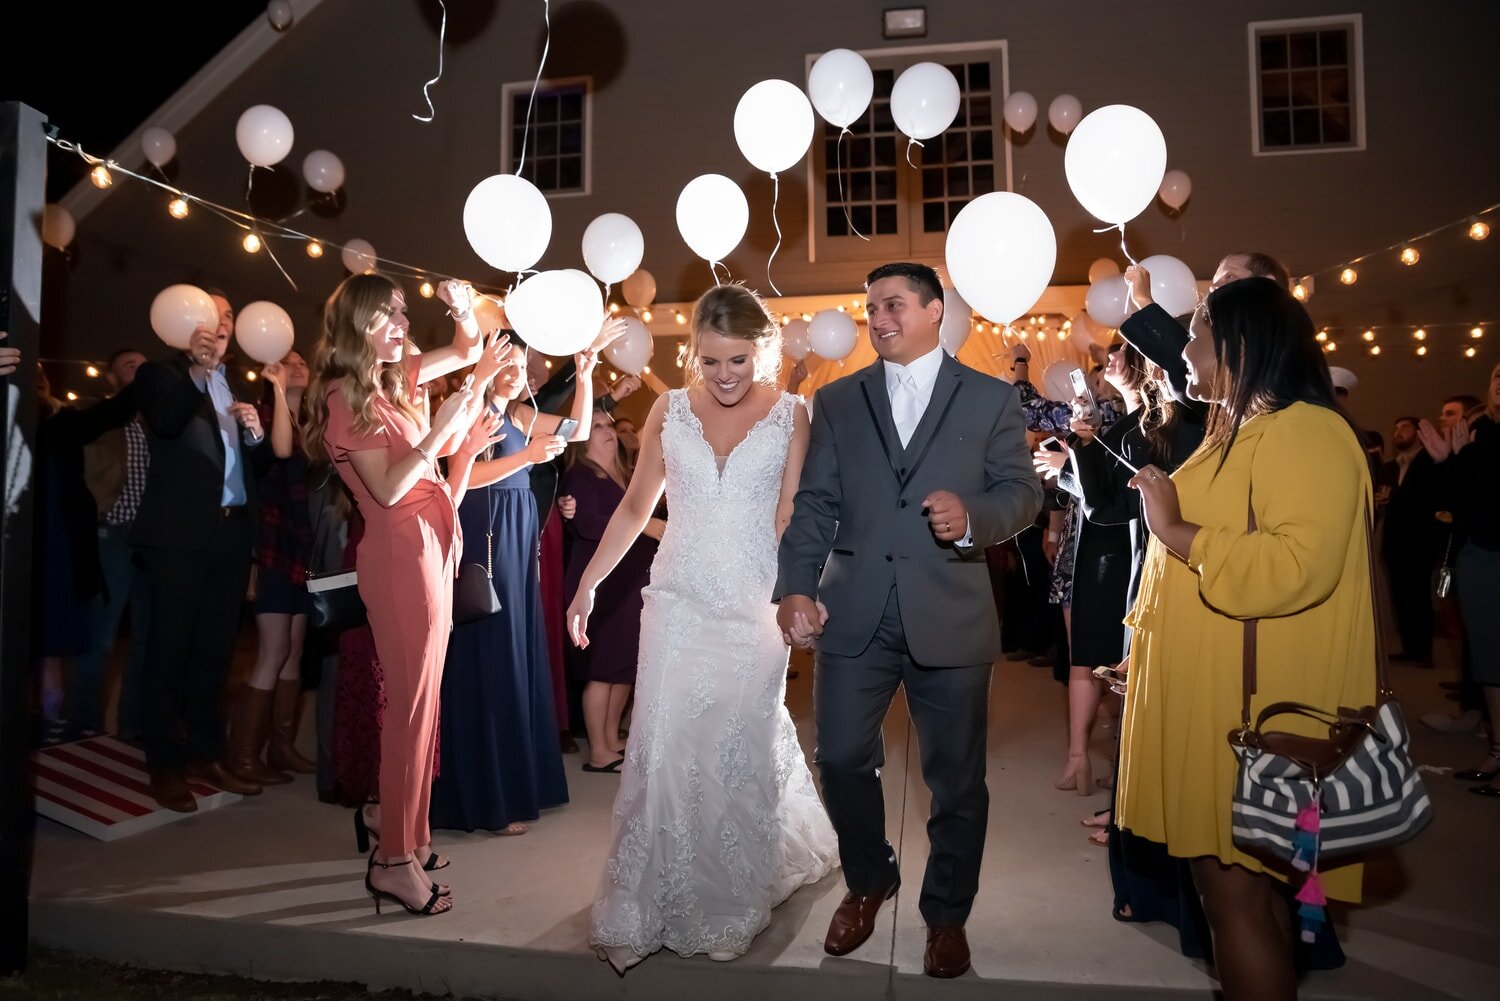 bride-groom-wedding-exit-balloons-glow-nightime-mcgranahanbarn-chadandbriephotography.jpg